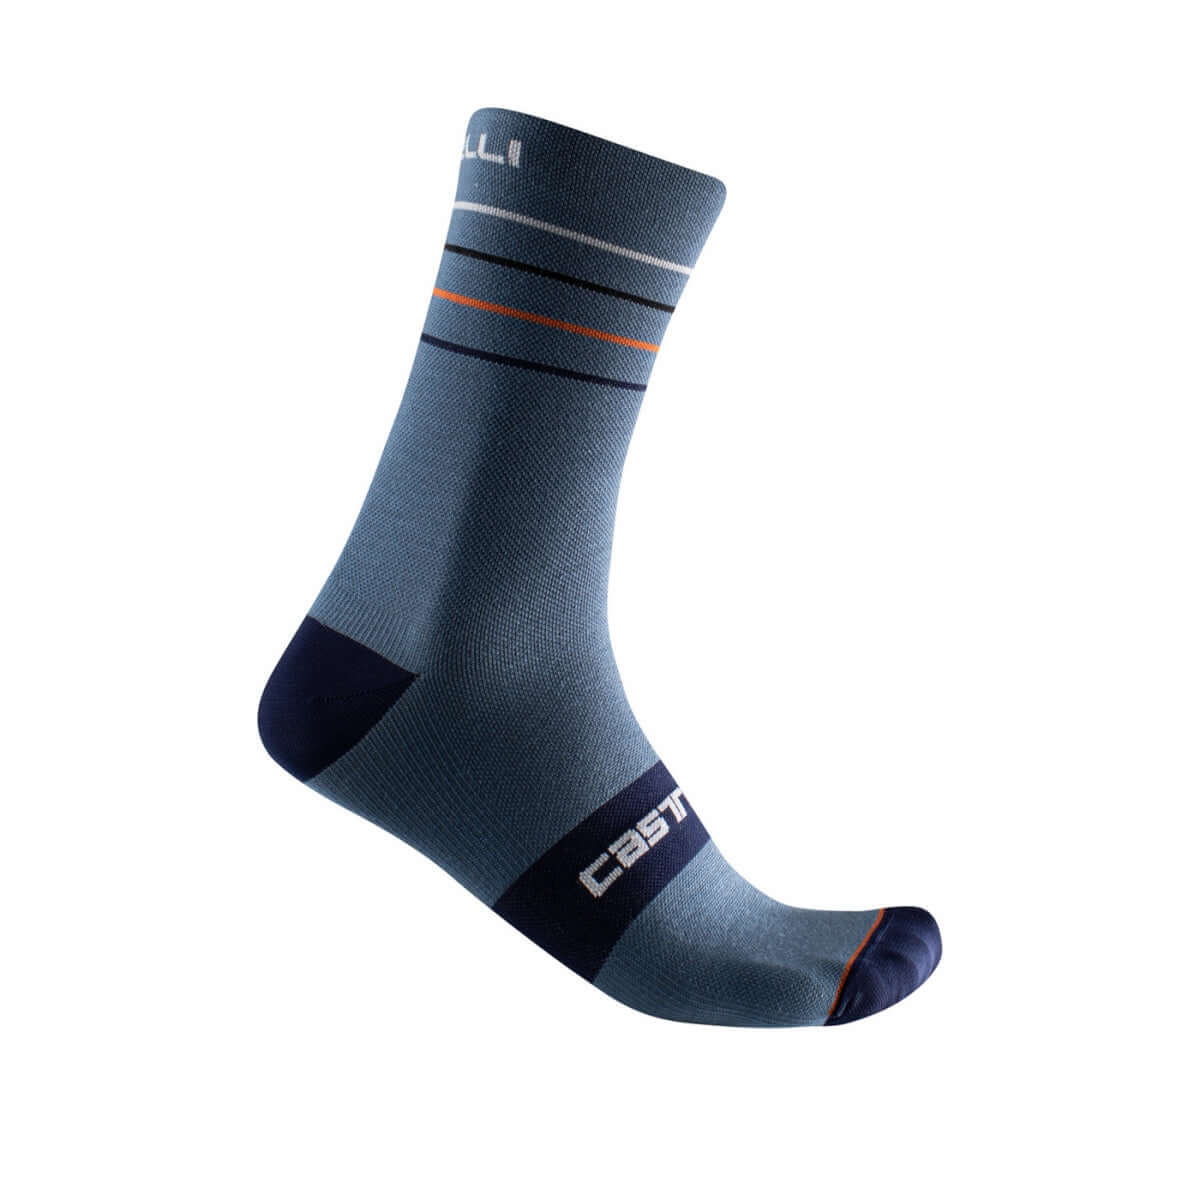 Castelli Endurance 15 Mens Cycling Socks (Light Steel Blue/Pop Orange)